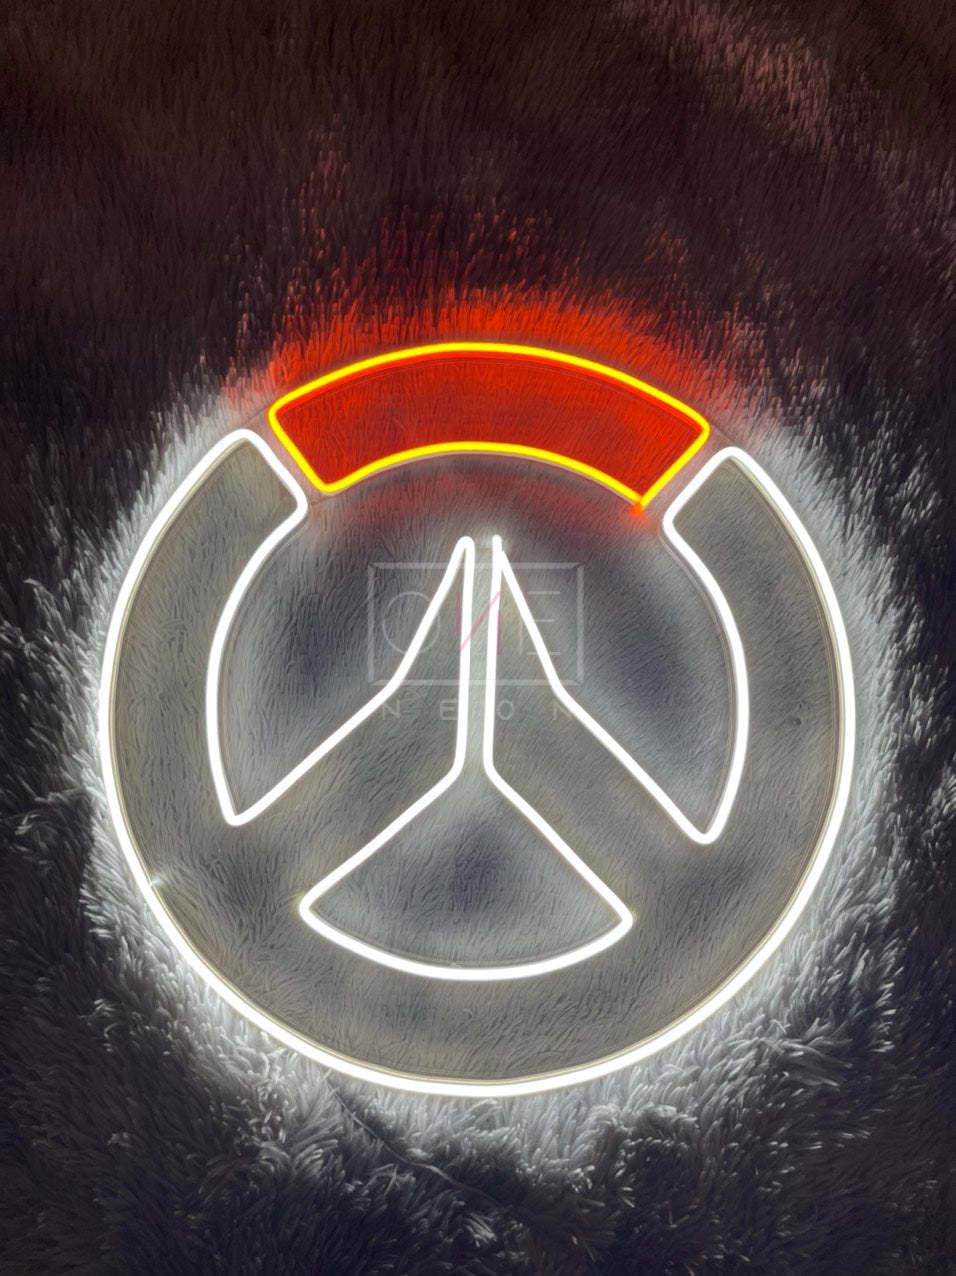 Logo Overwatch | Game Neon Sign - $185.00 - $220.00